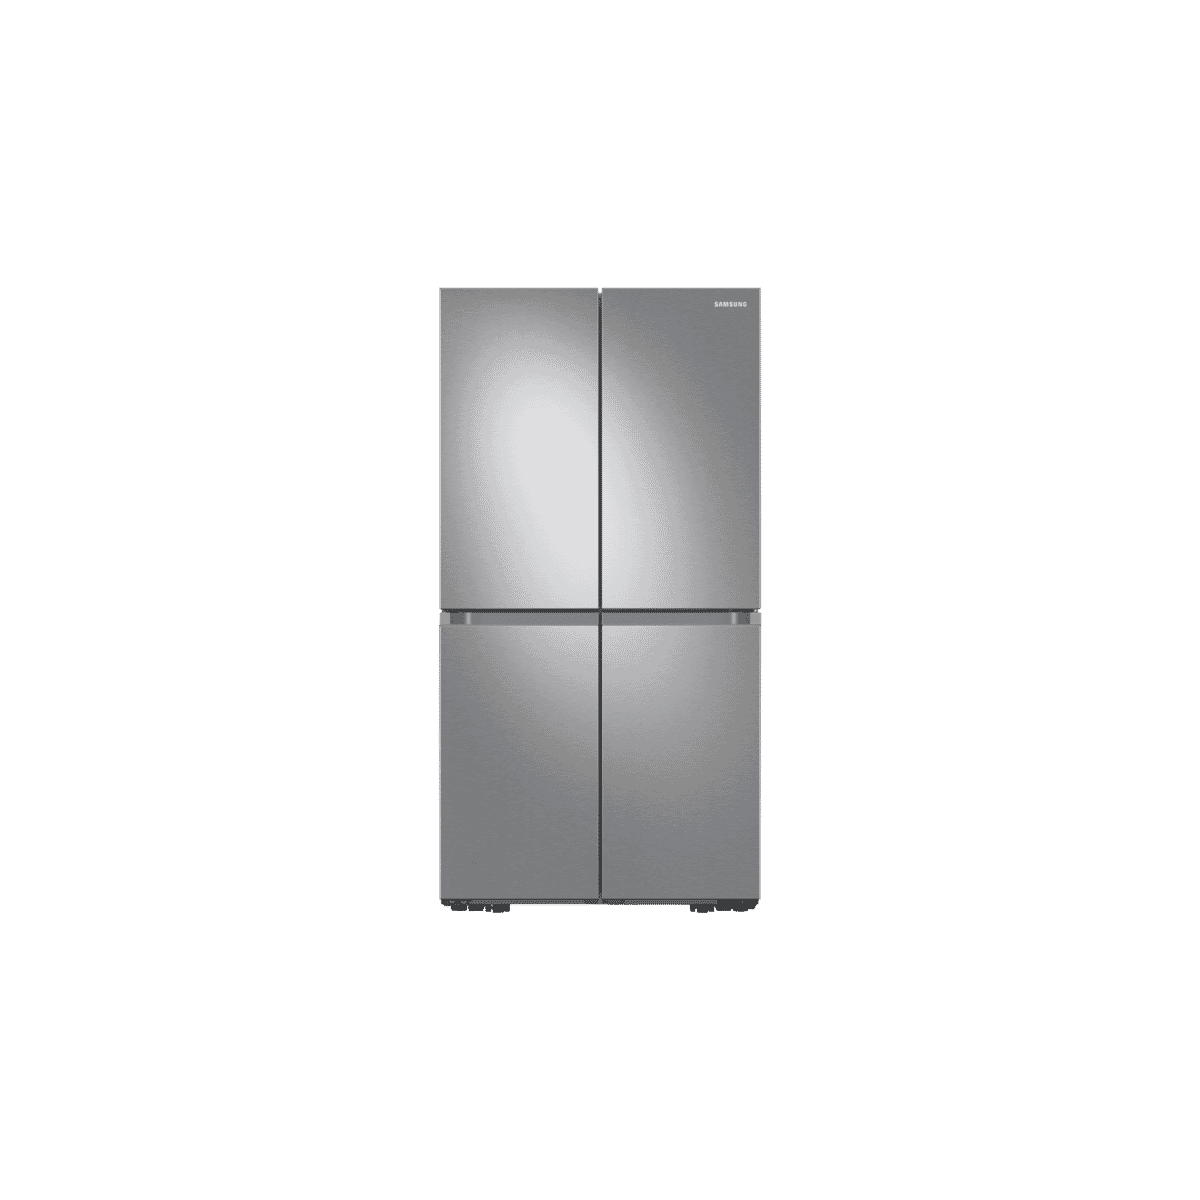 Samsung SRF7500SB 648L French Door Refrigerator at The Good Guys